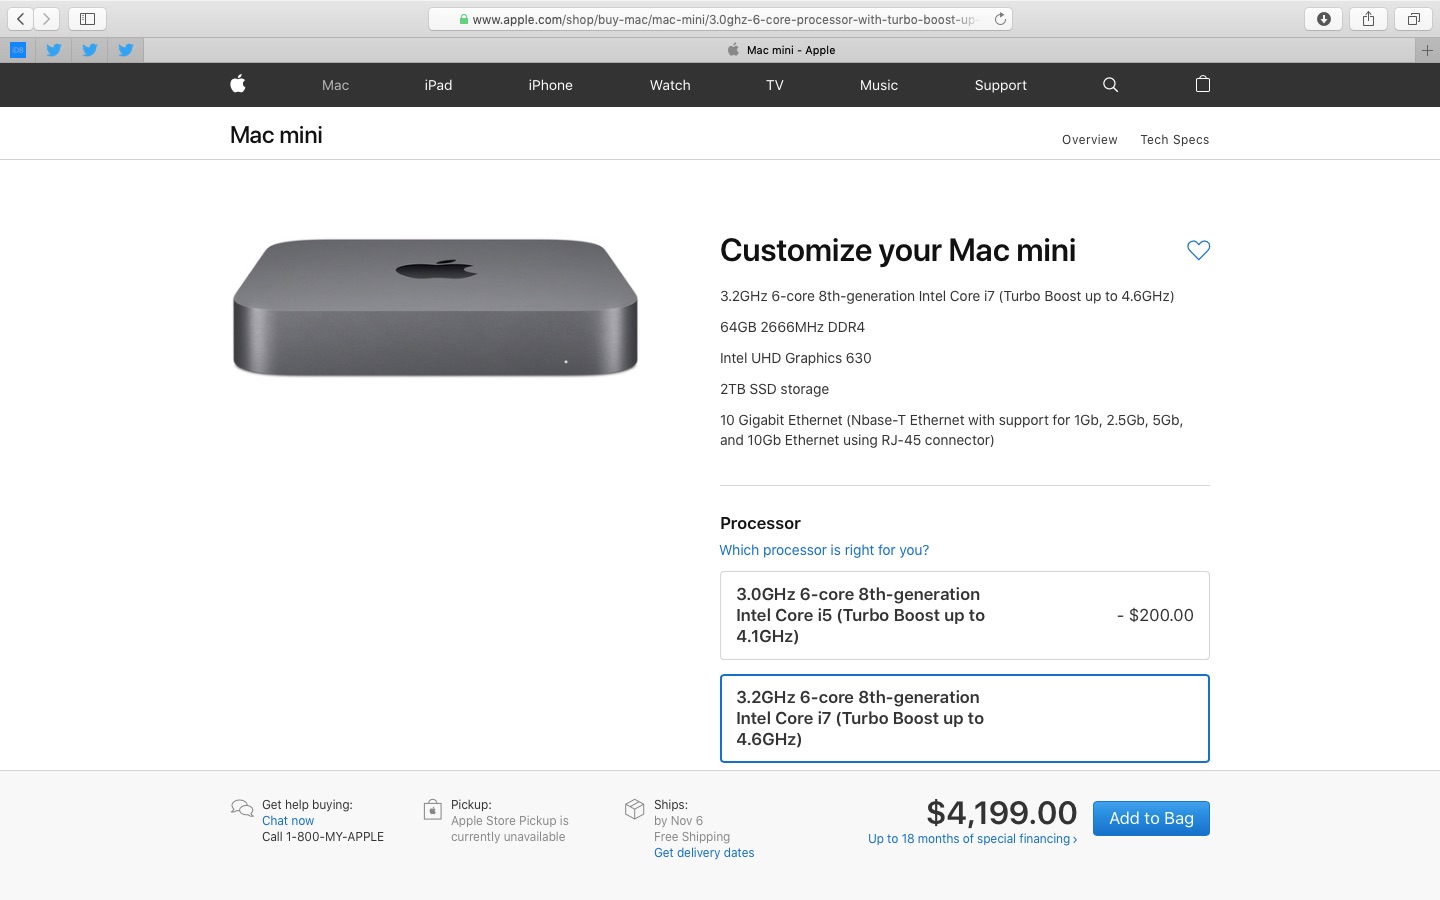 Flagship Mac mini configuration will set you back $4,199